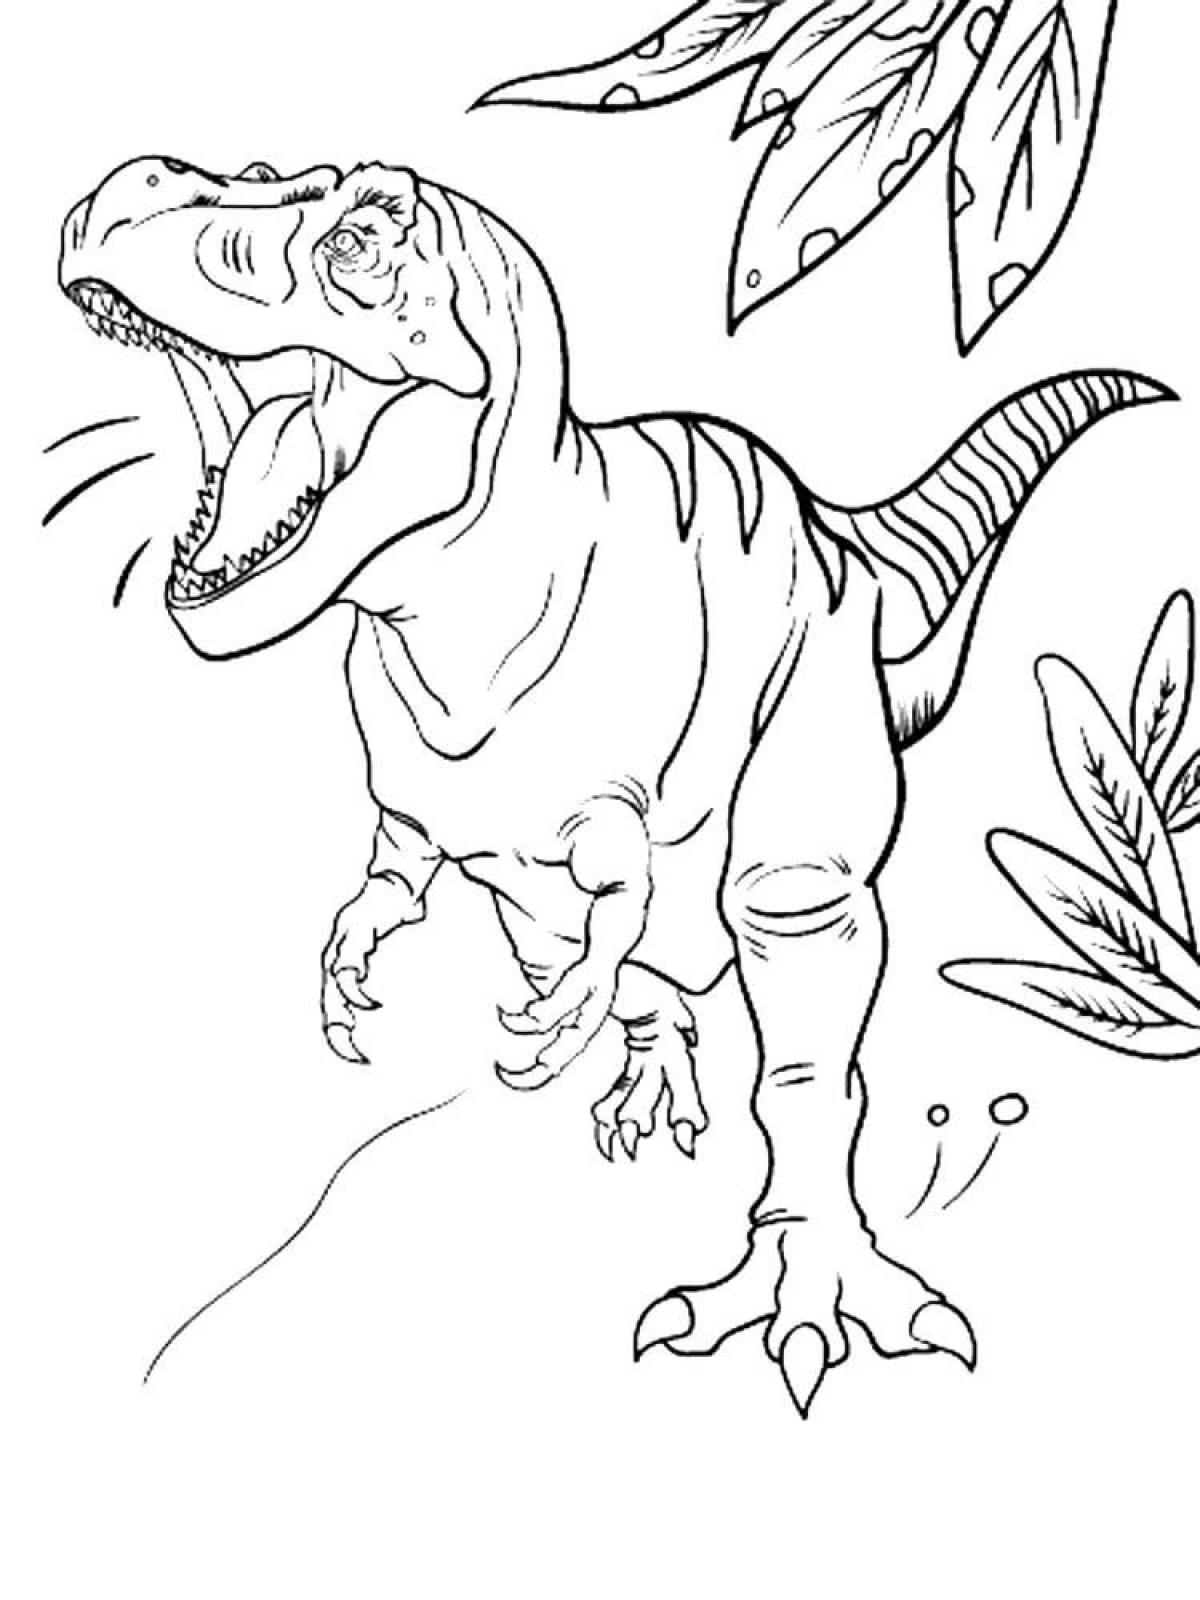 Динозавр рекс #3